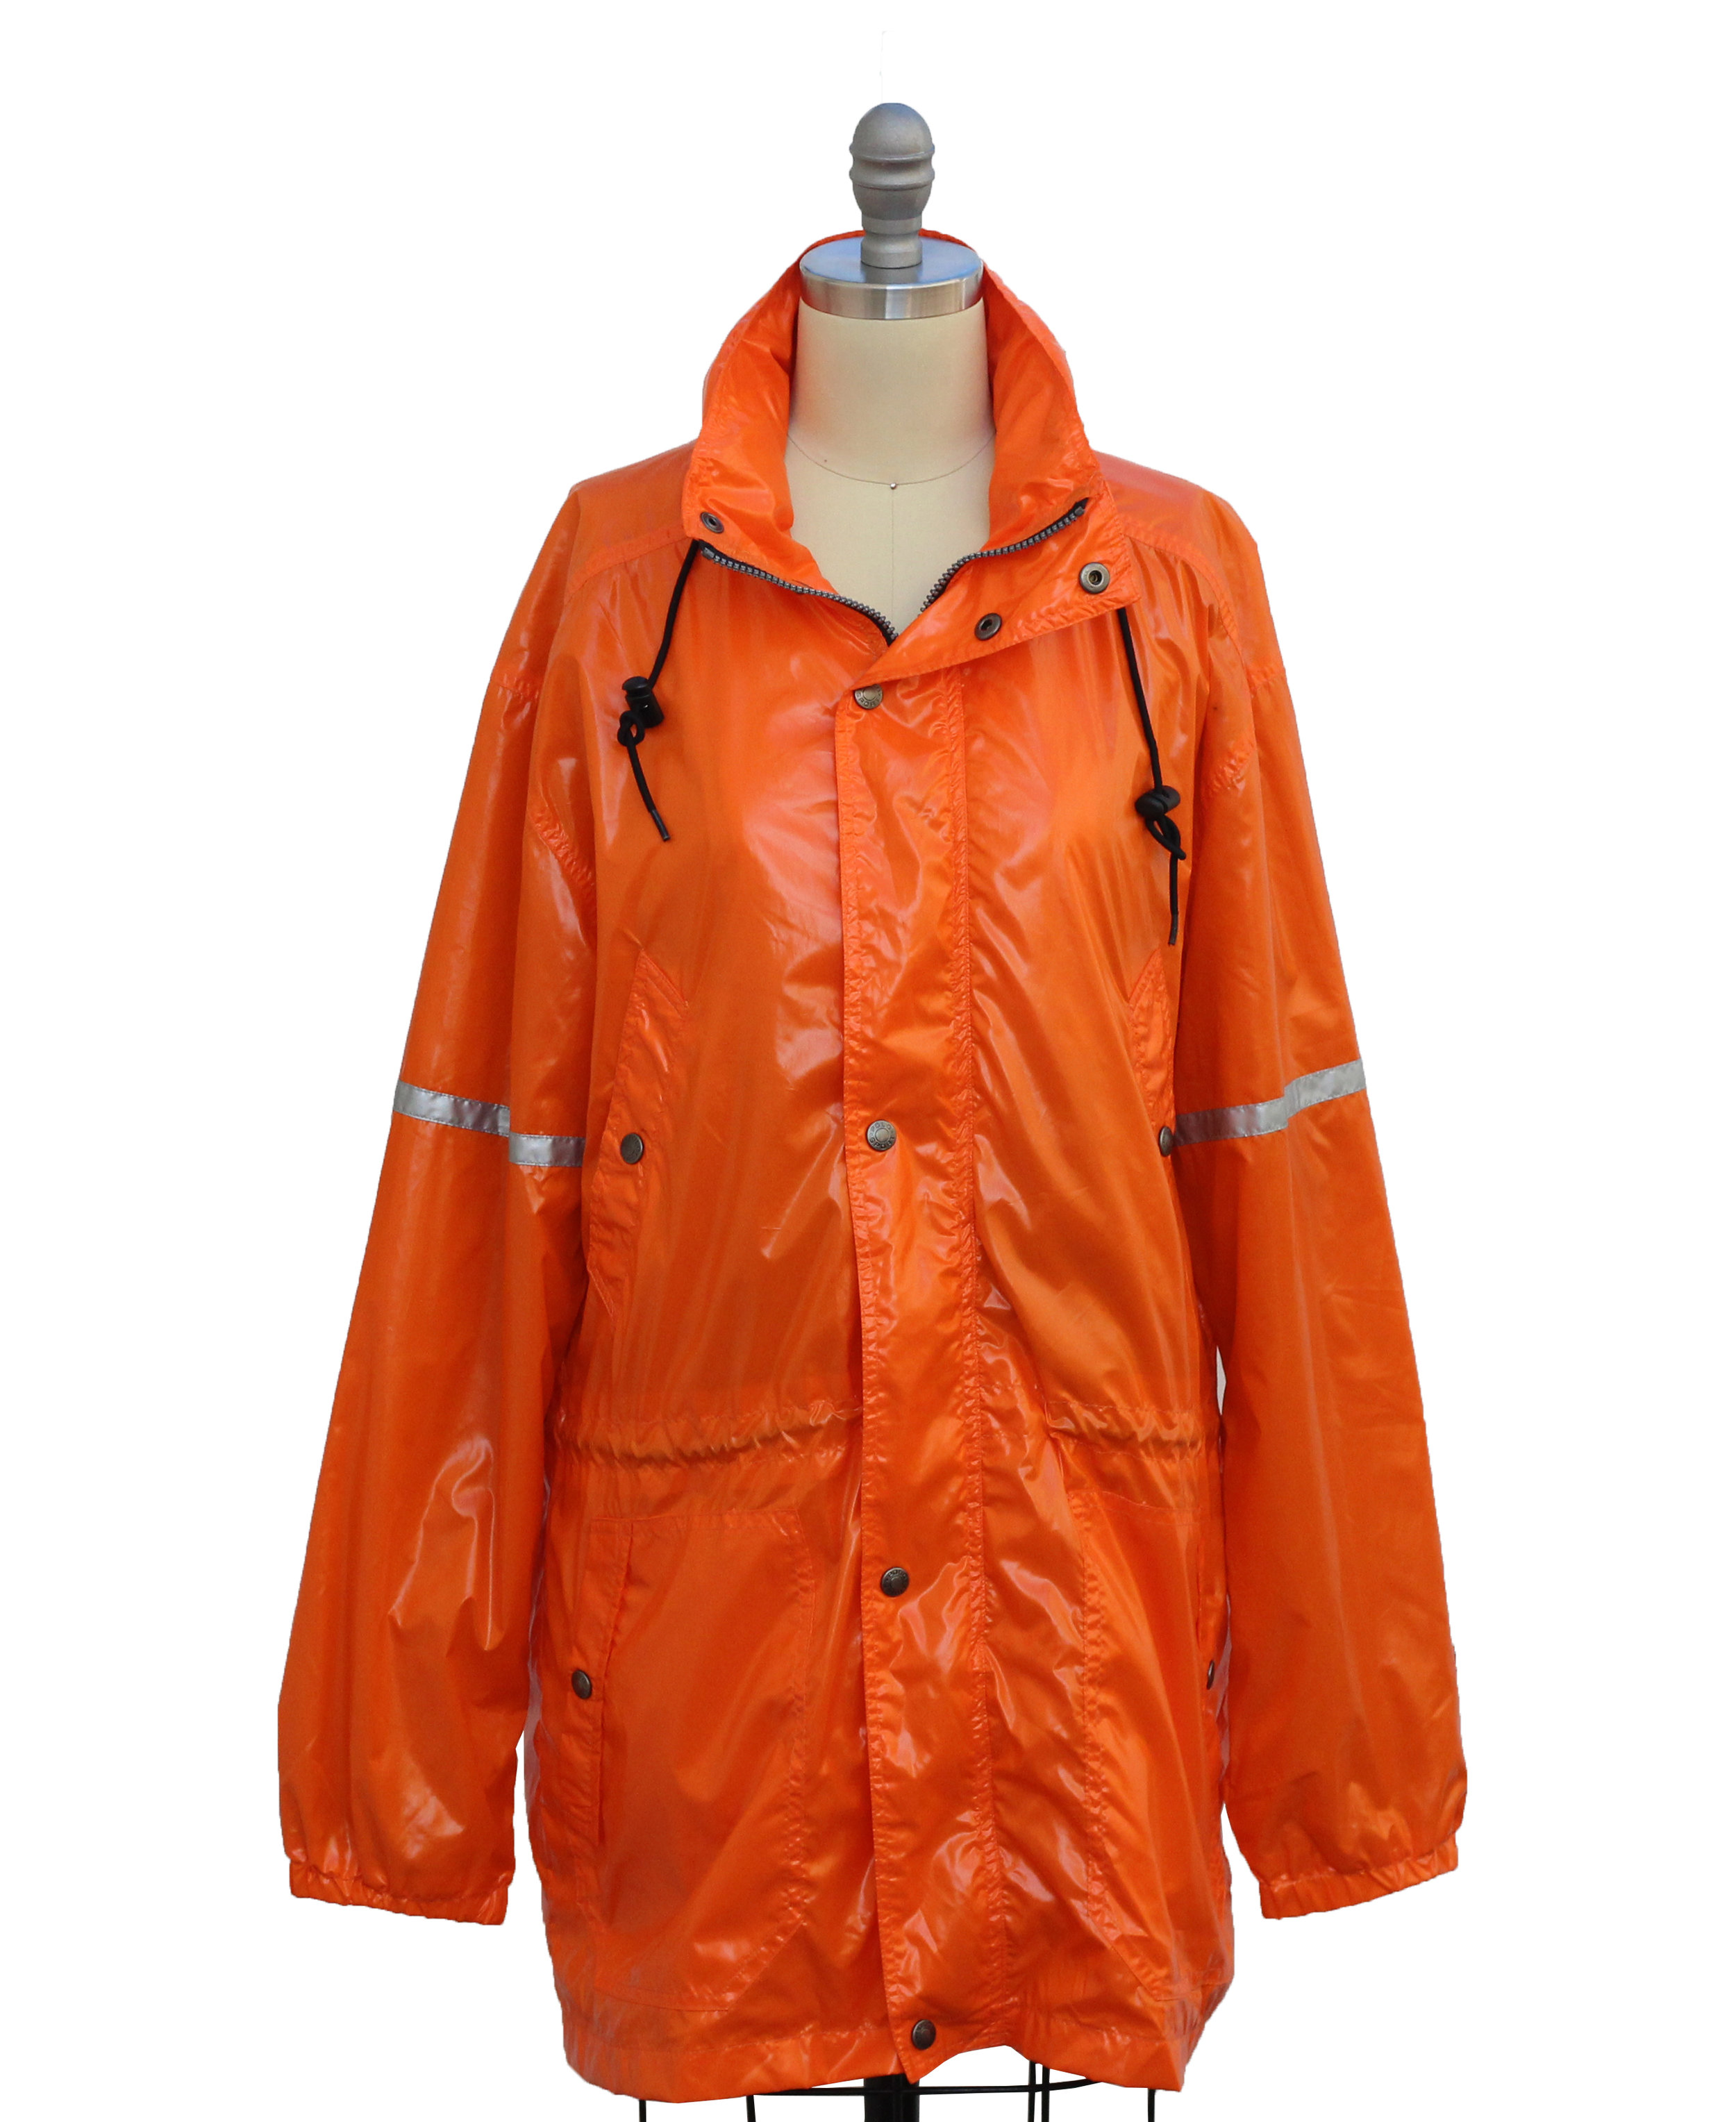 ralph lauren women's rain jackets